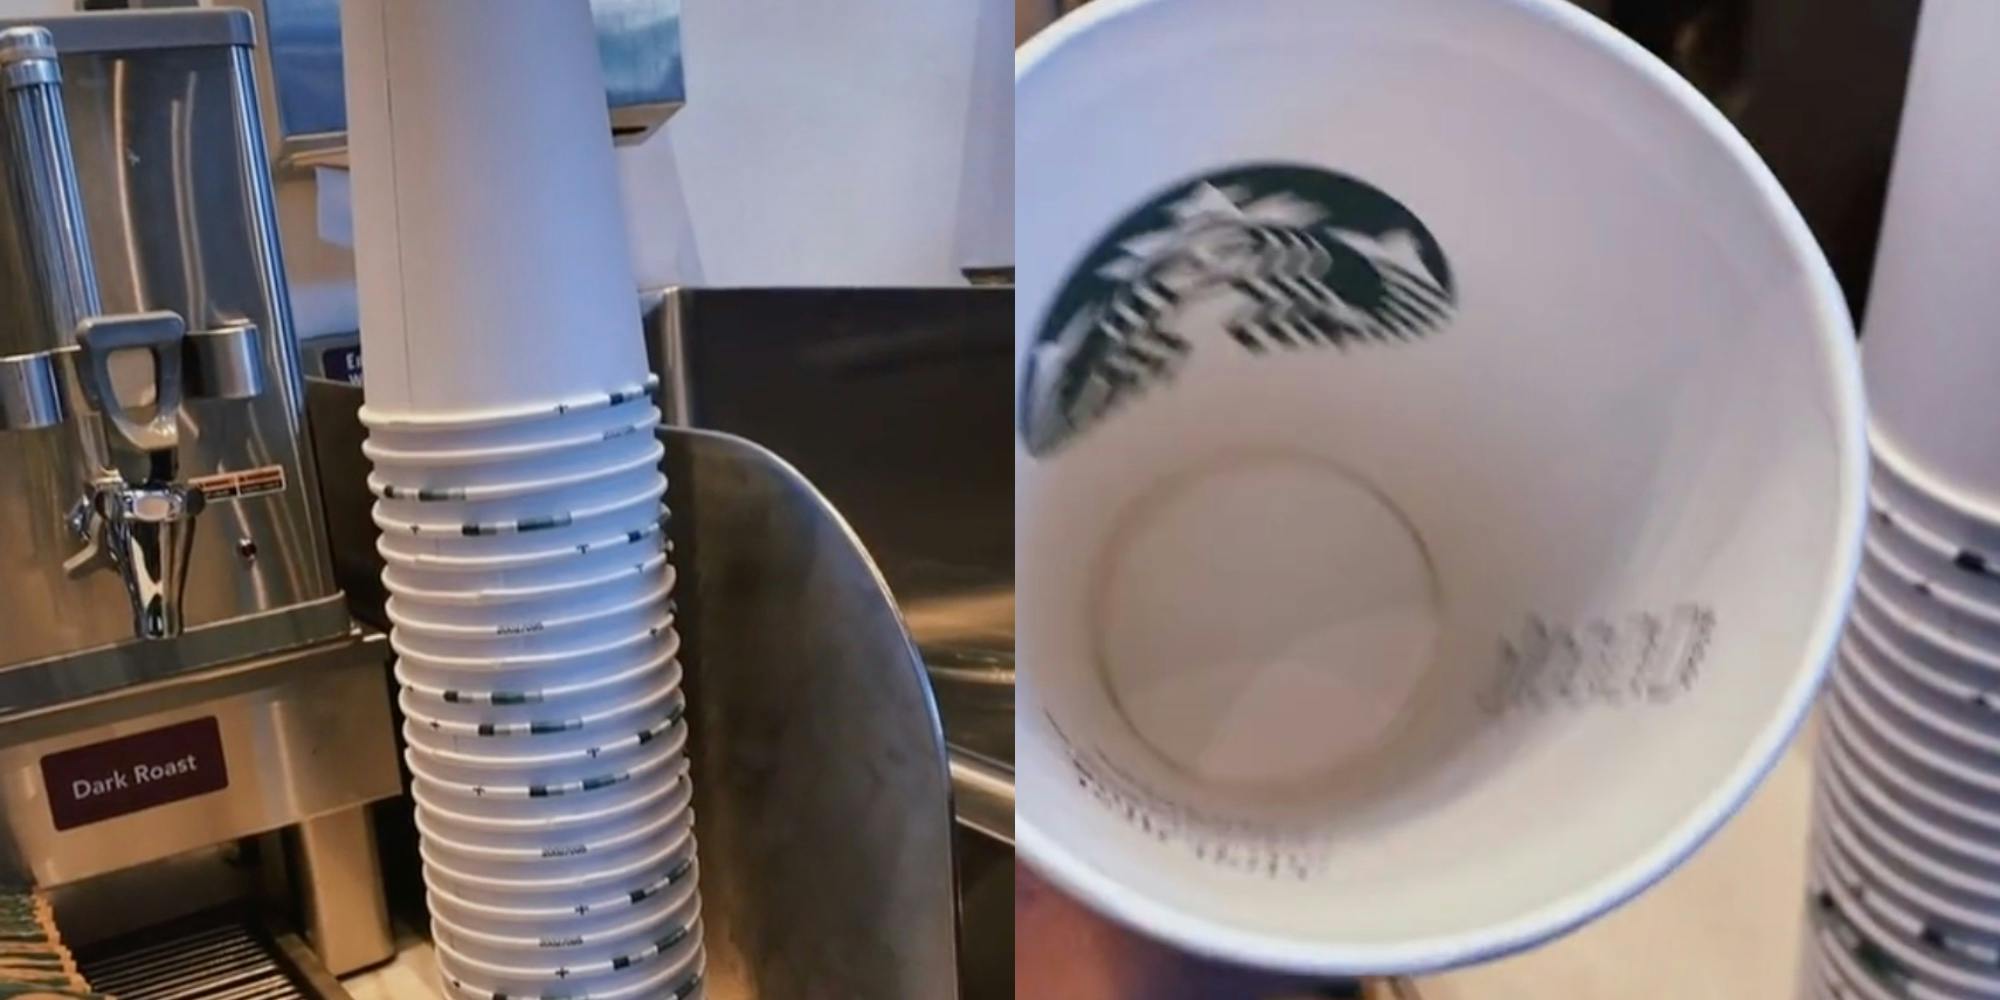 Love this cup 😍 #starbucks #starbuckscup #starbucksrecycledglass